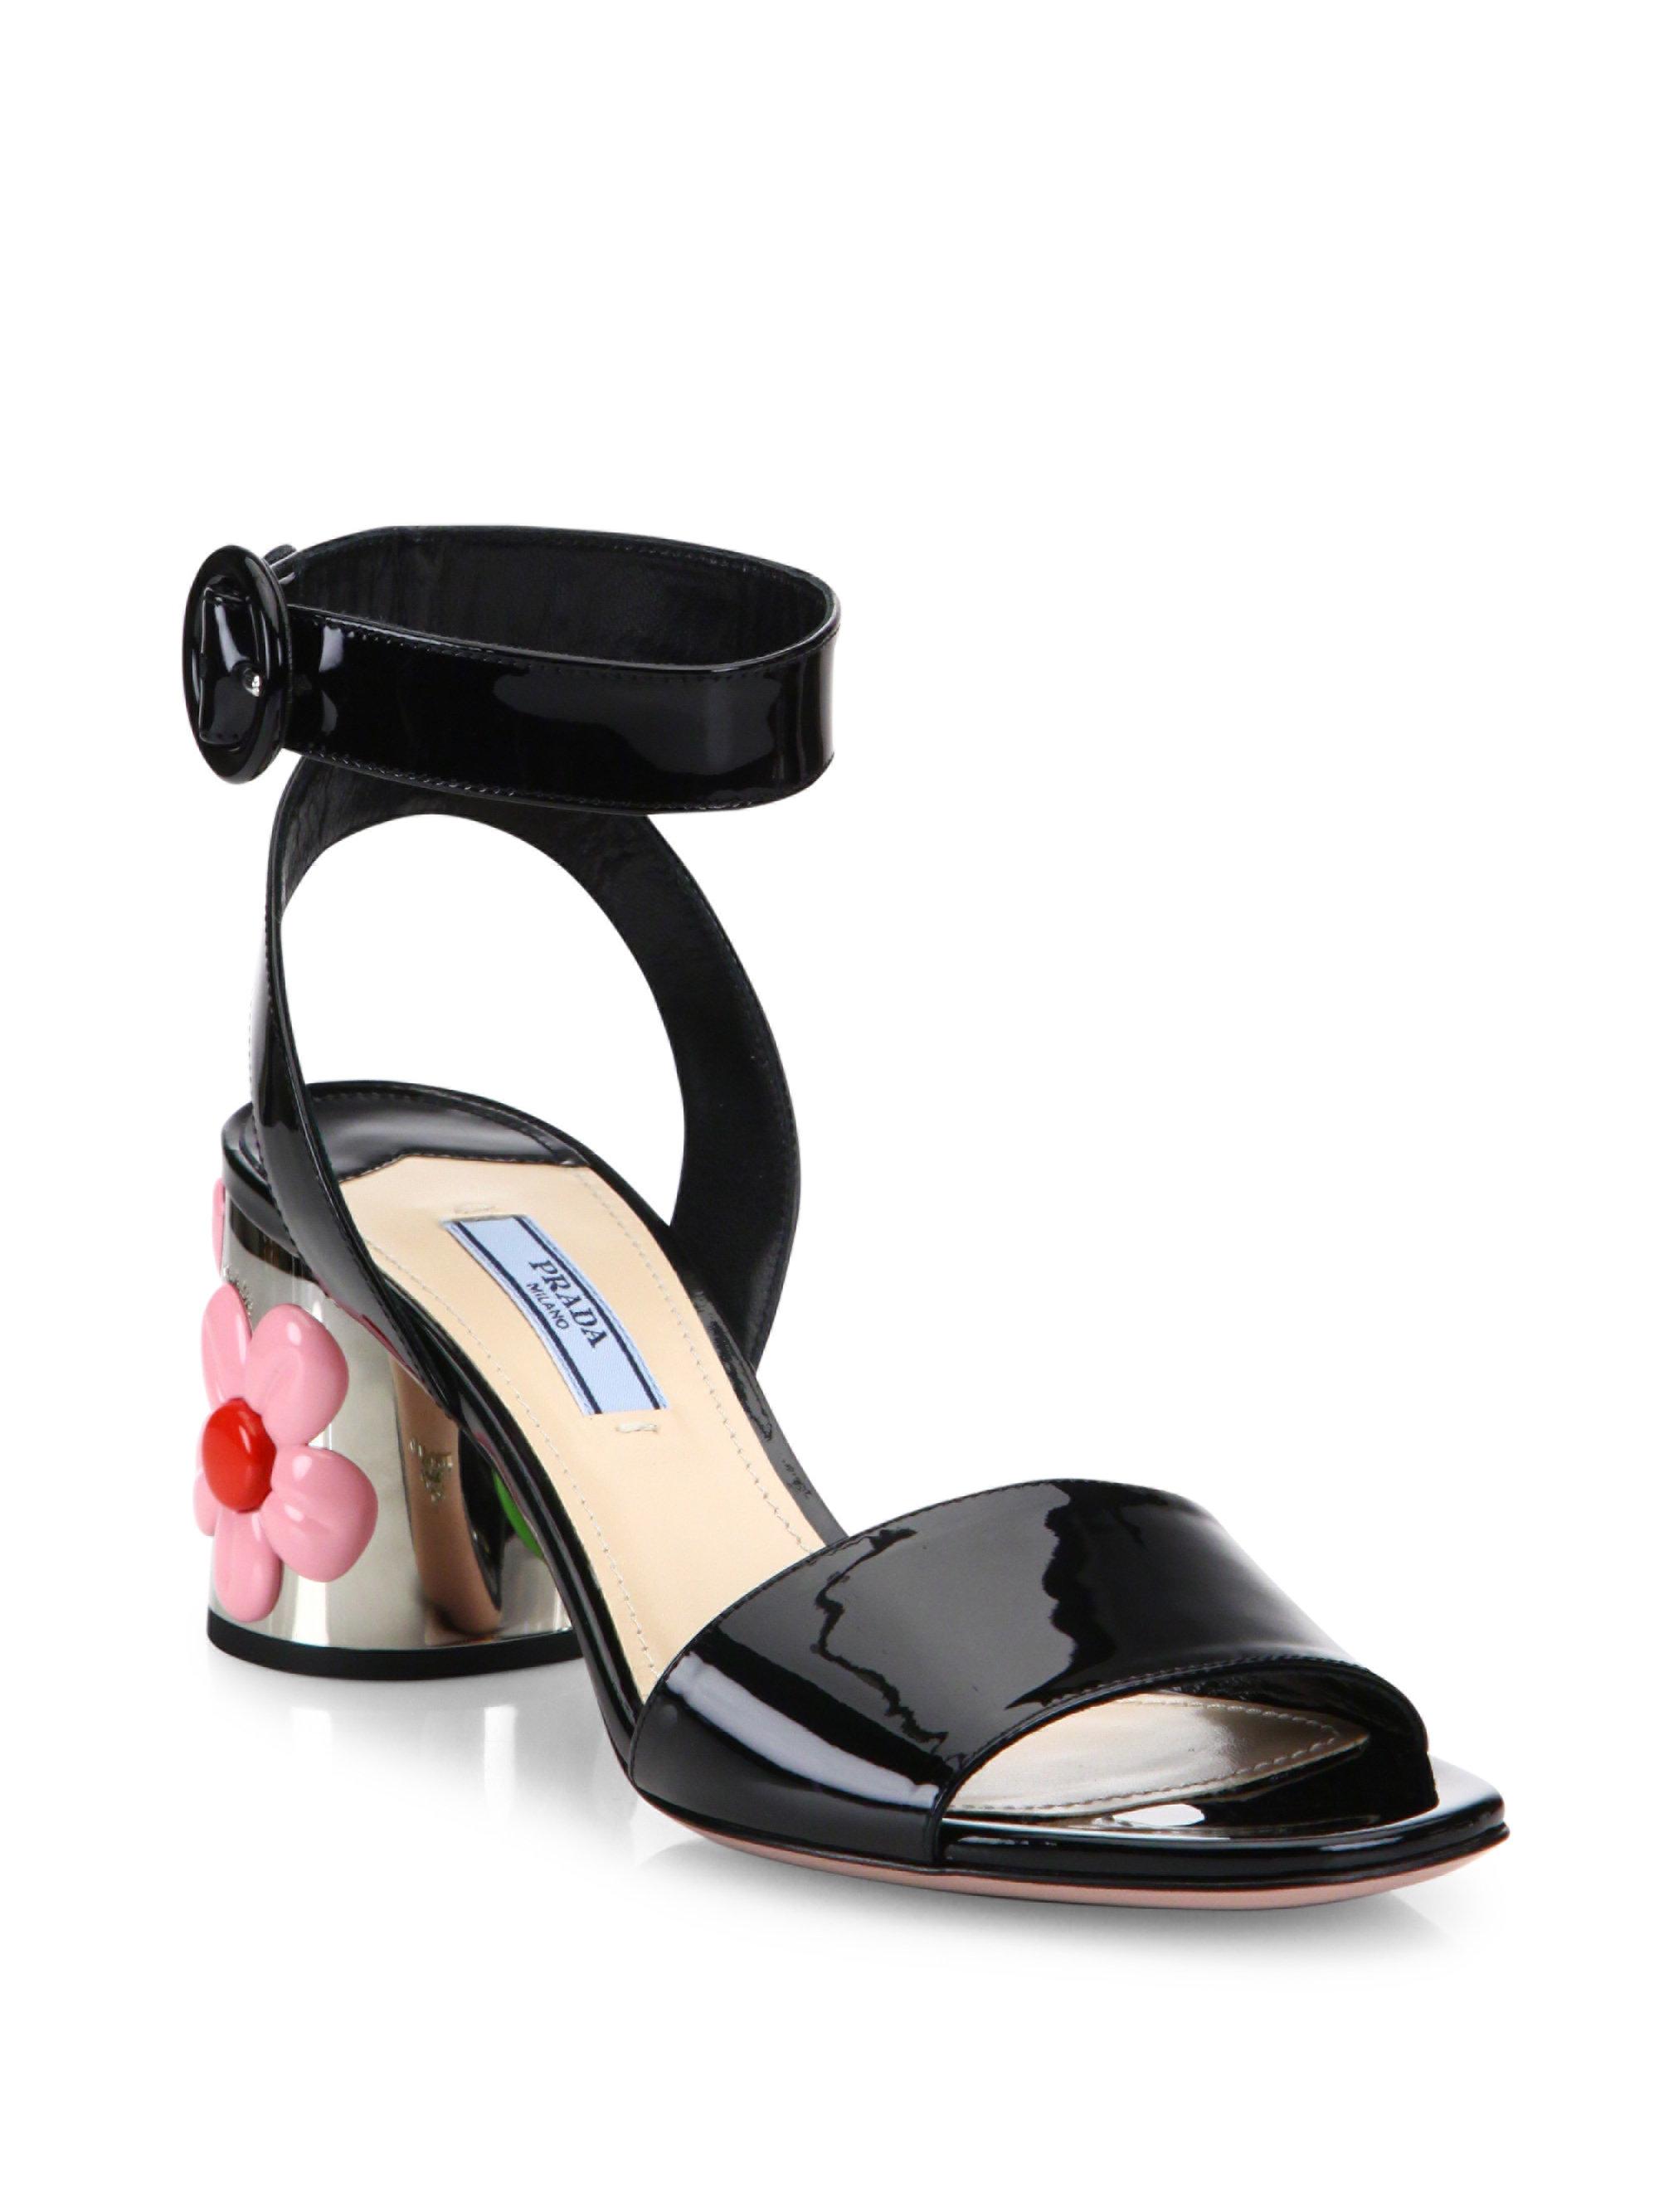 Prada Flower-heel Patent Leather Ankle-strap Sandals in Black | Lyst